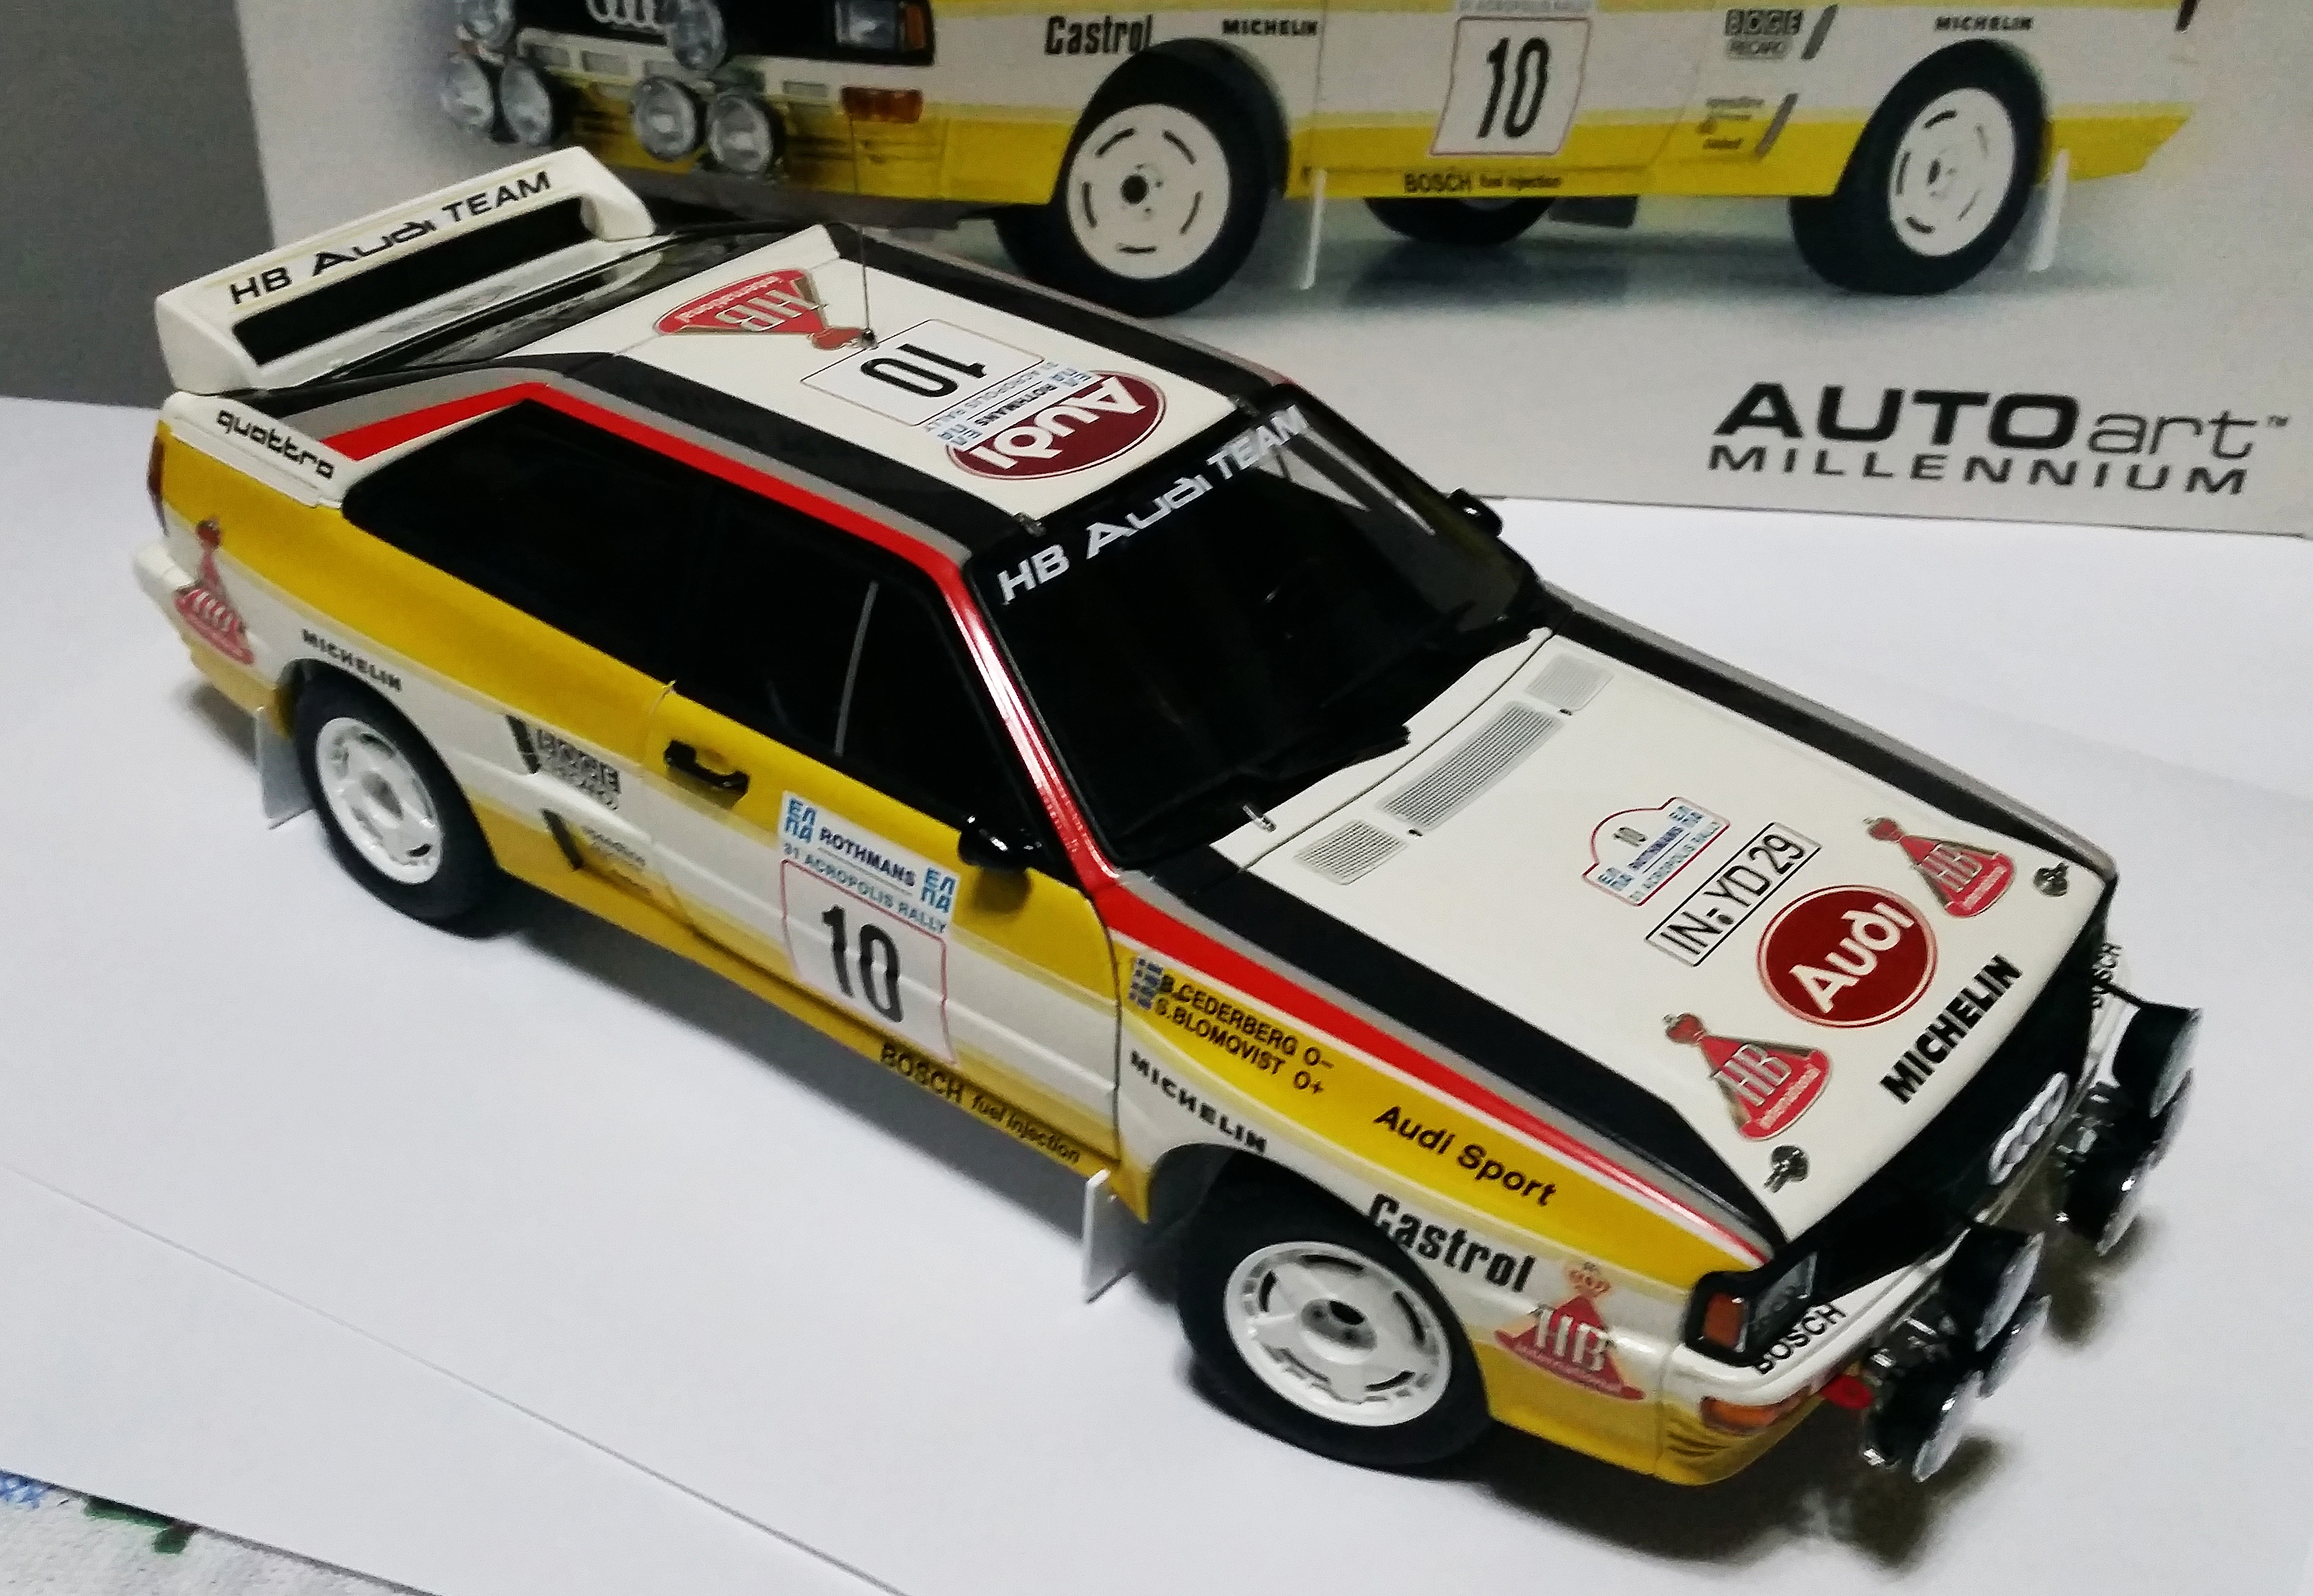 Audi quattro A2 Rallye (1984) - pictures, information & specs